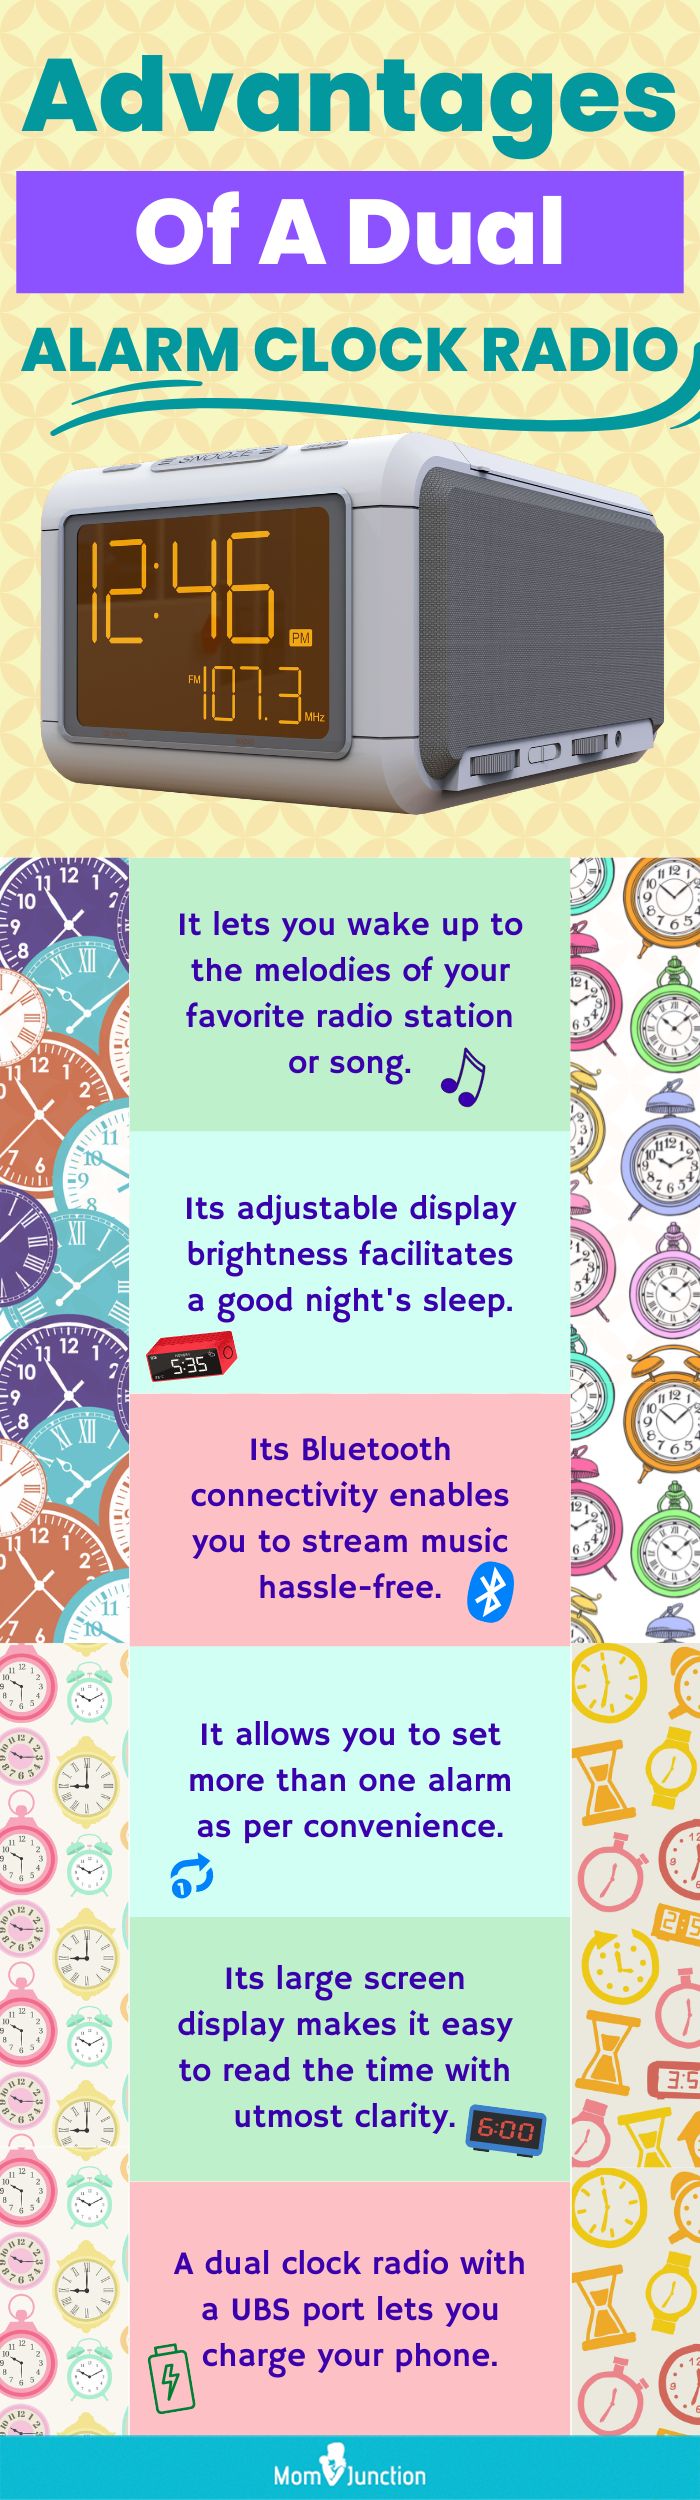 Advantages Of A Dual Alarm Clock Radio (infographic)